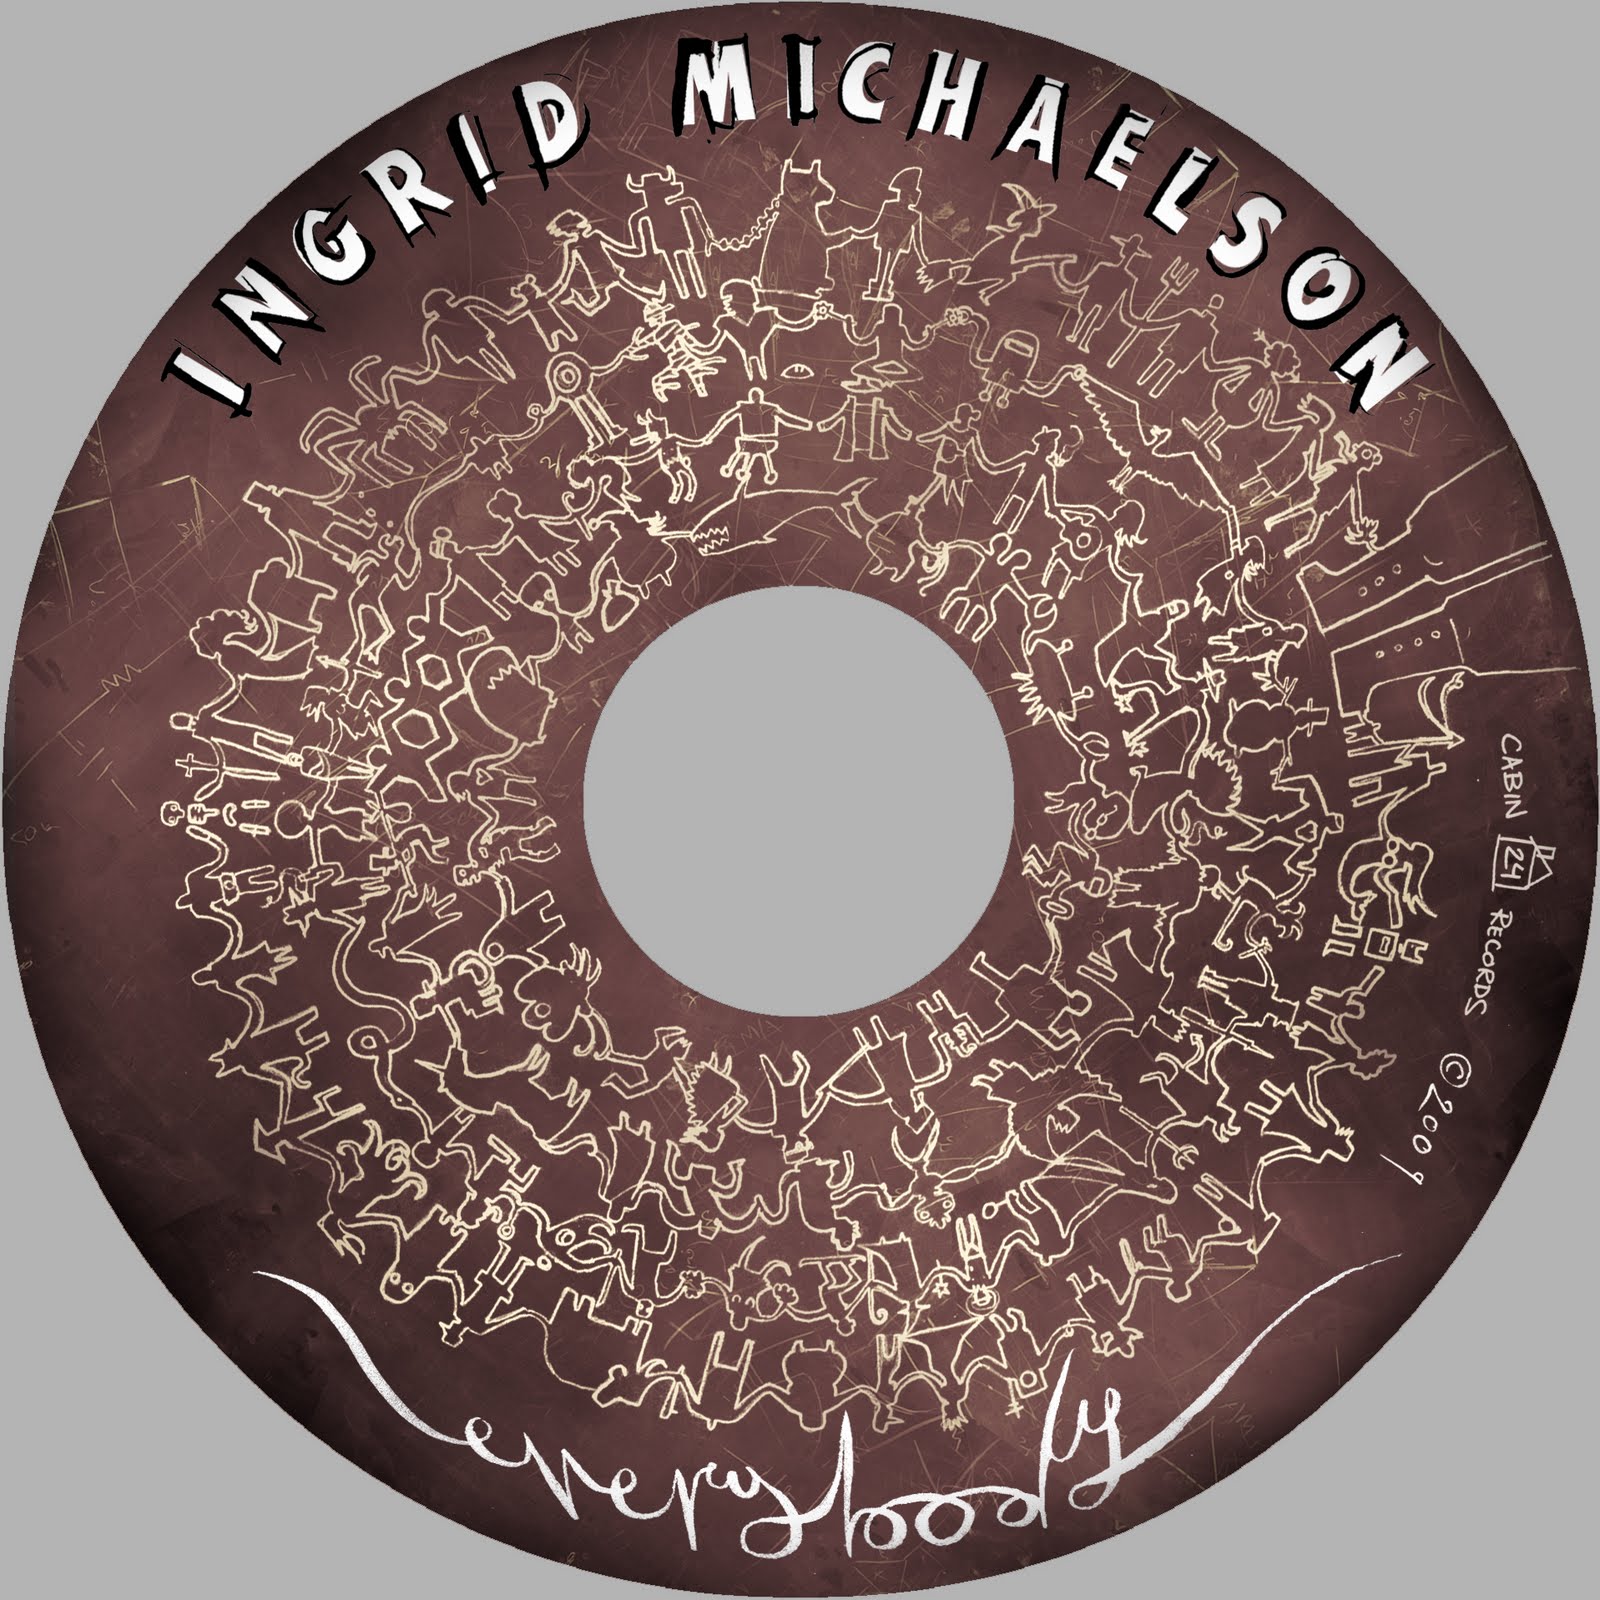 Everybody+ingrid+michaelson+album+cover